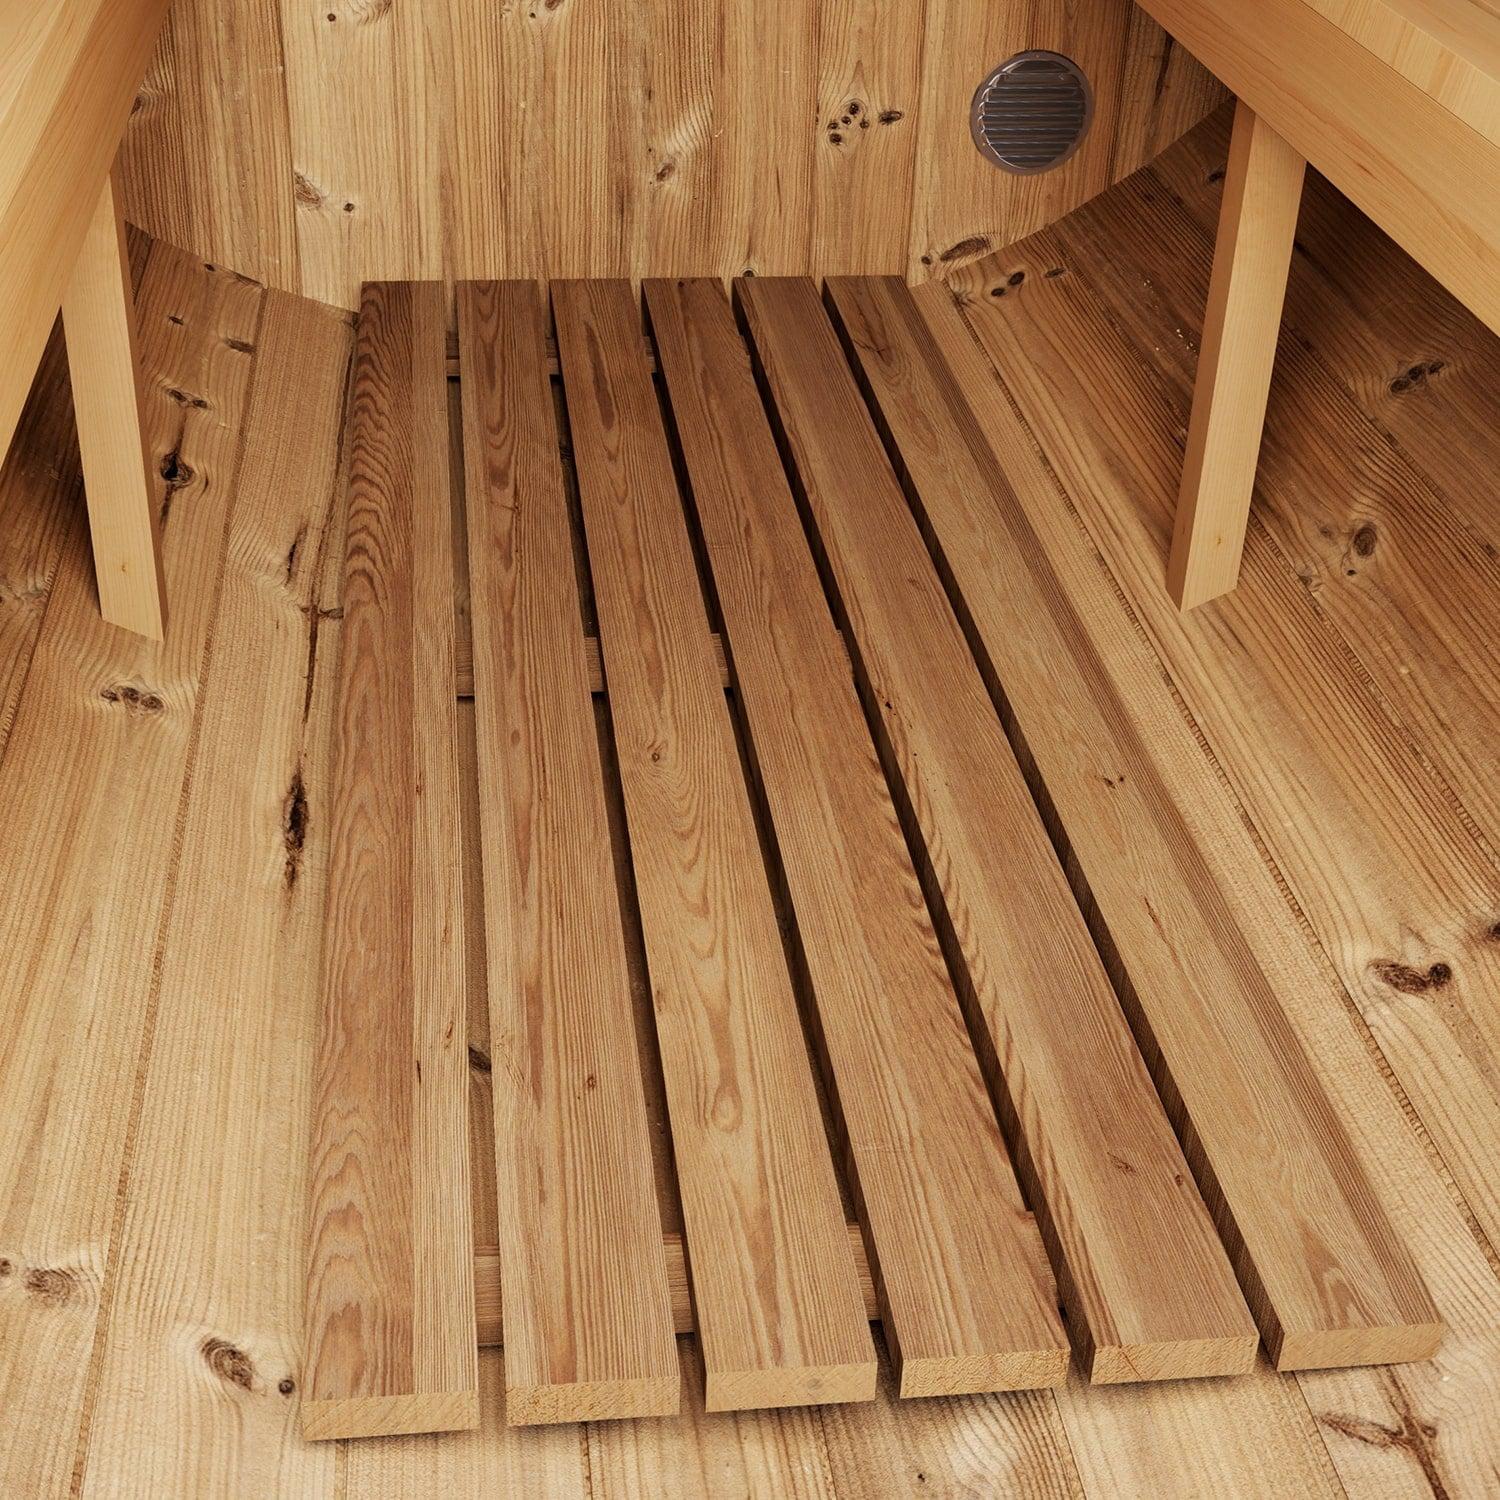 SaunaLife E8 Sauna Barrel Floor - Purely Relaxation